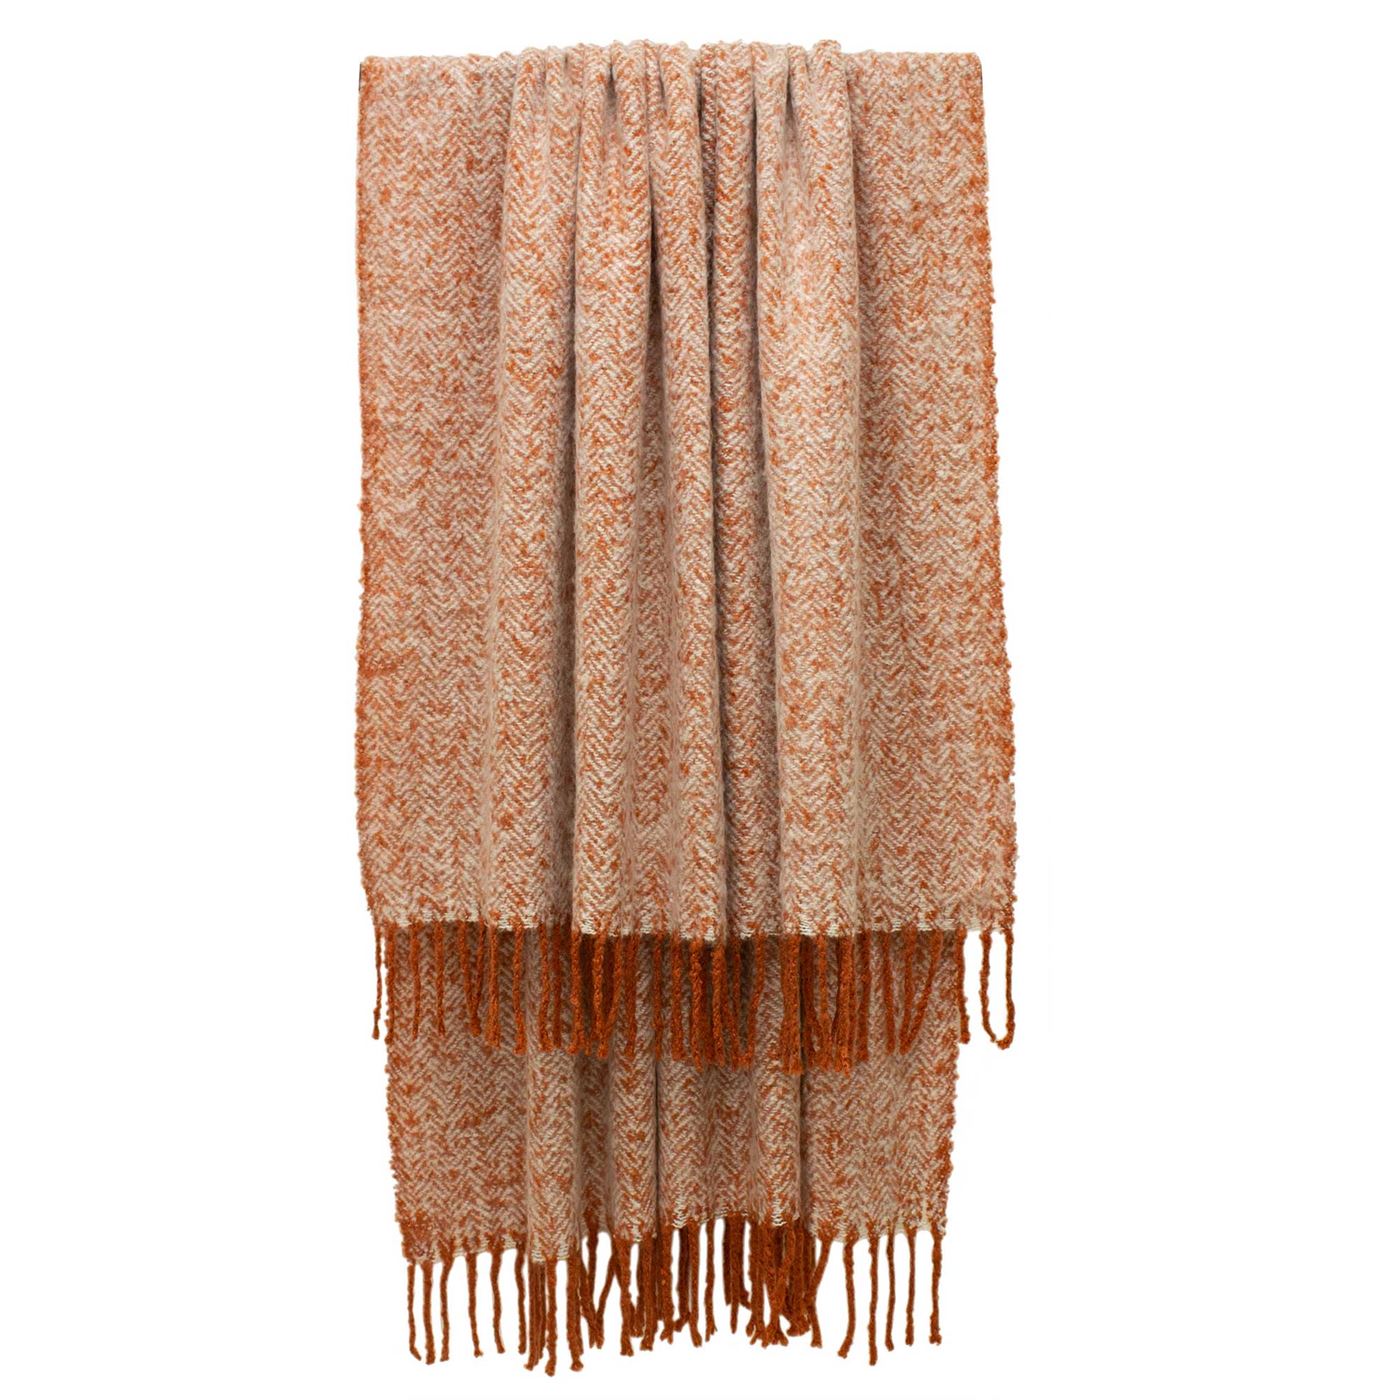 Soft Rust Throw Blanket, Orange | Barker & Stonehouse